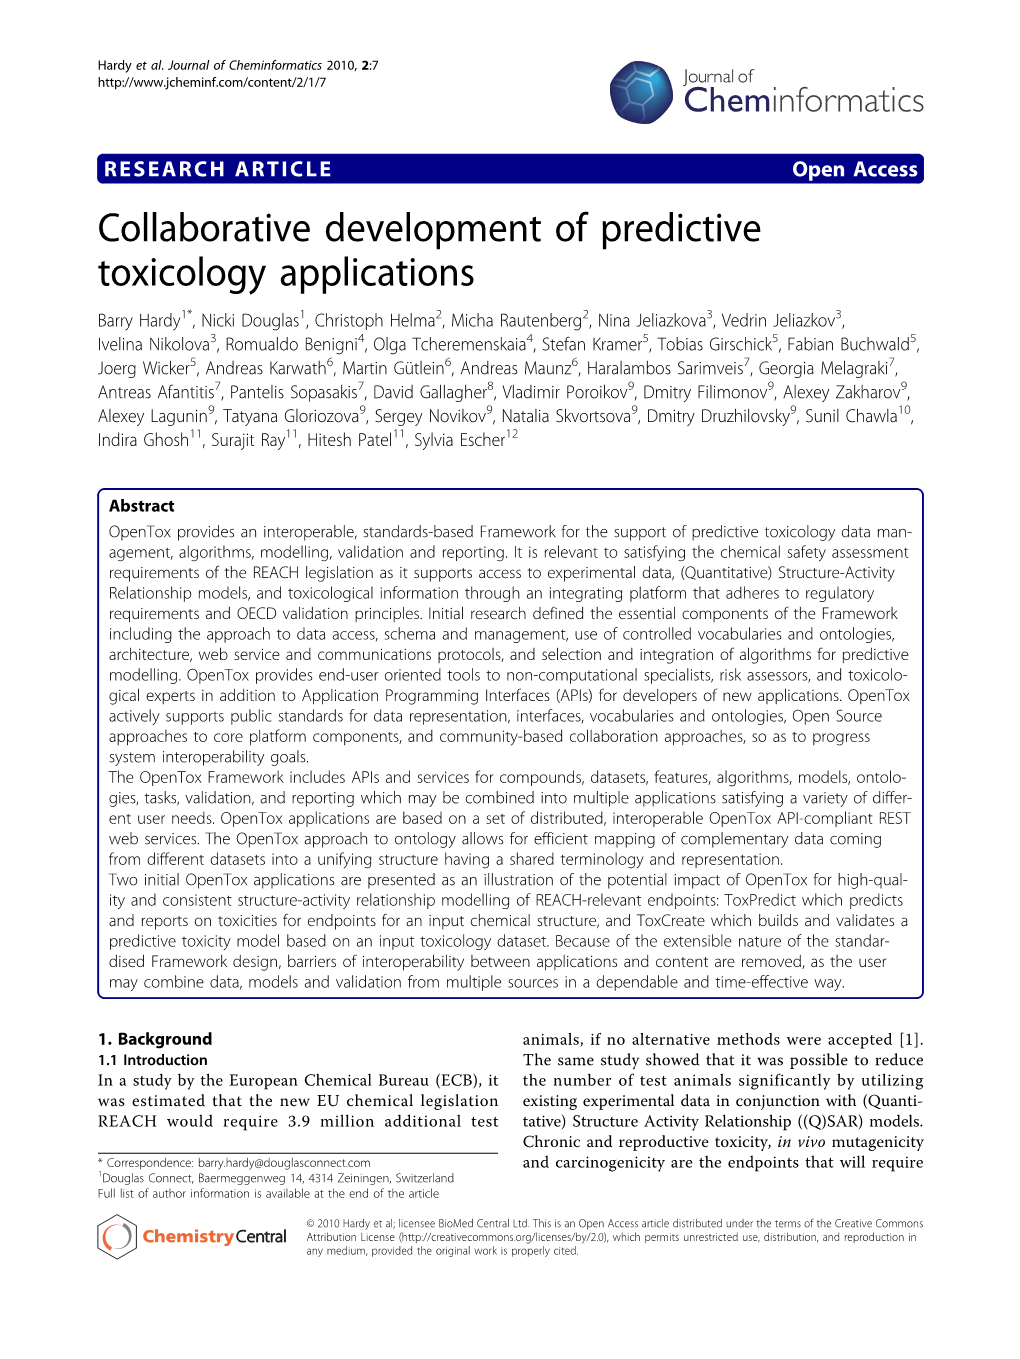 Collaborative Development of Predictive Toxicology Applications